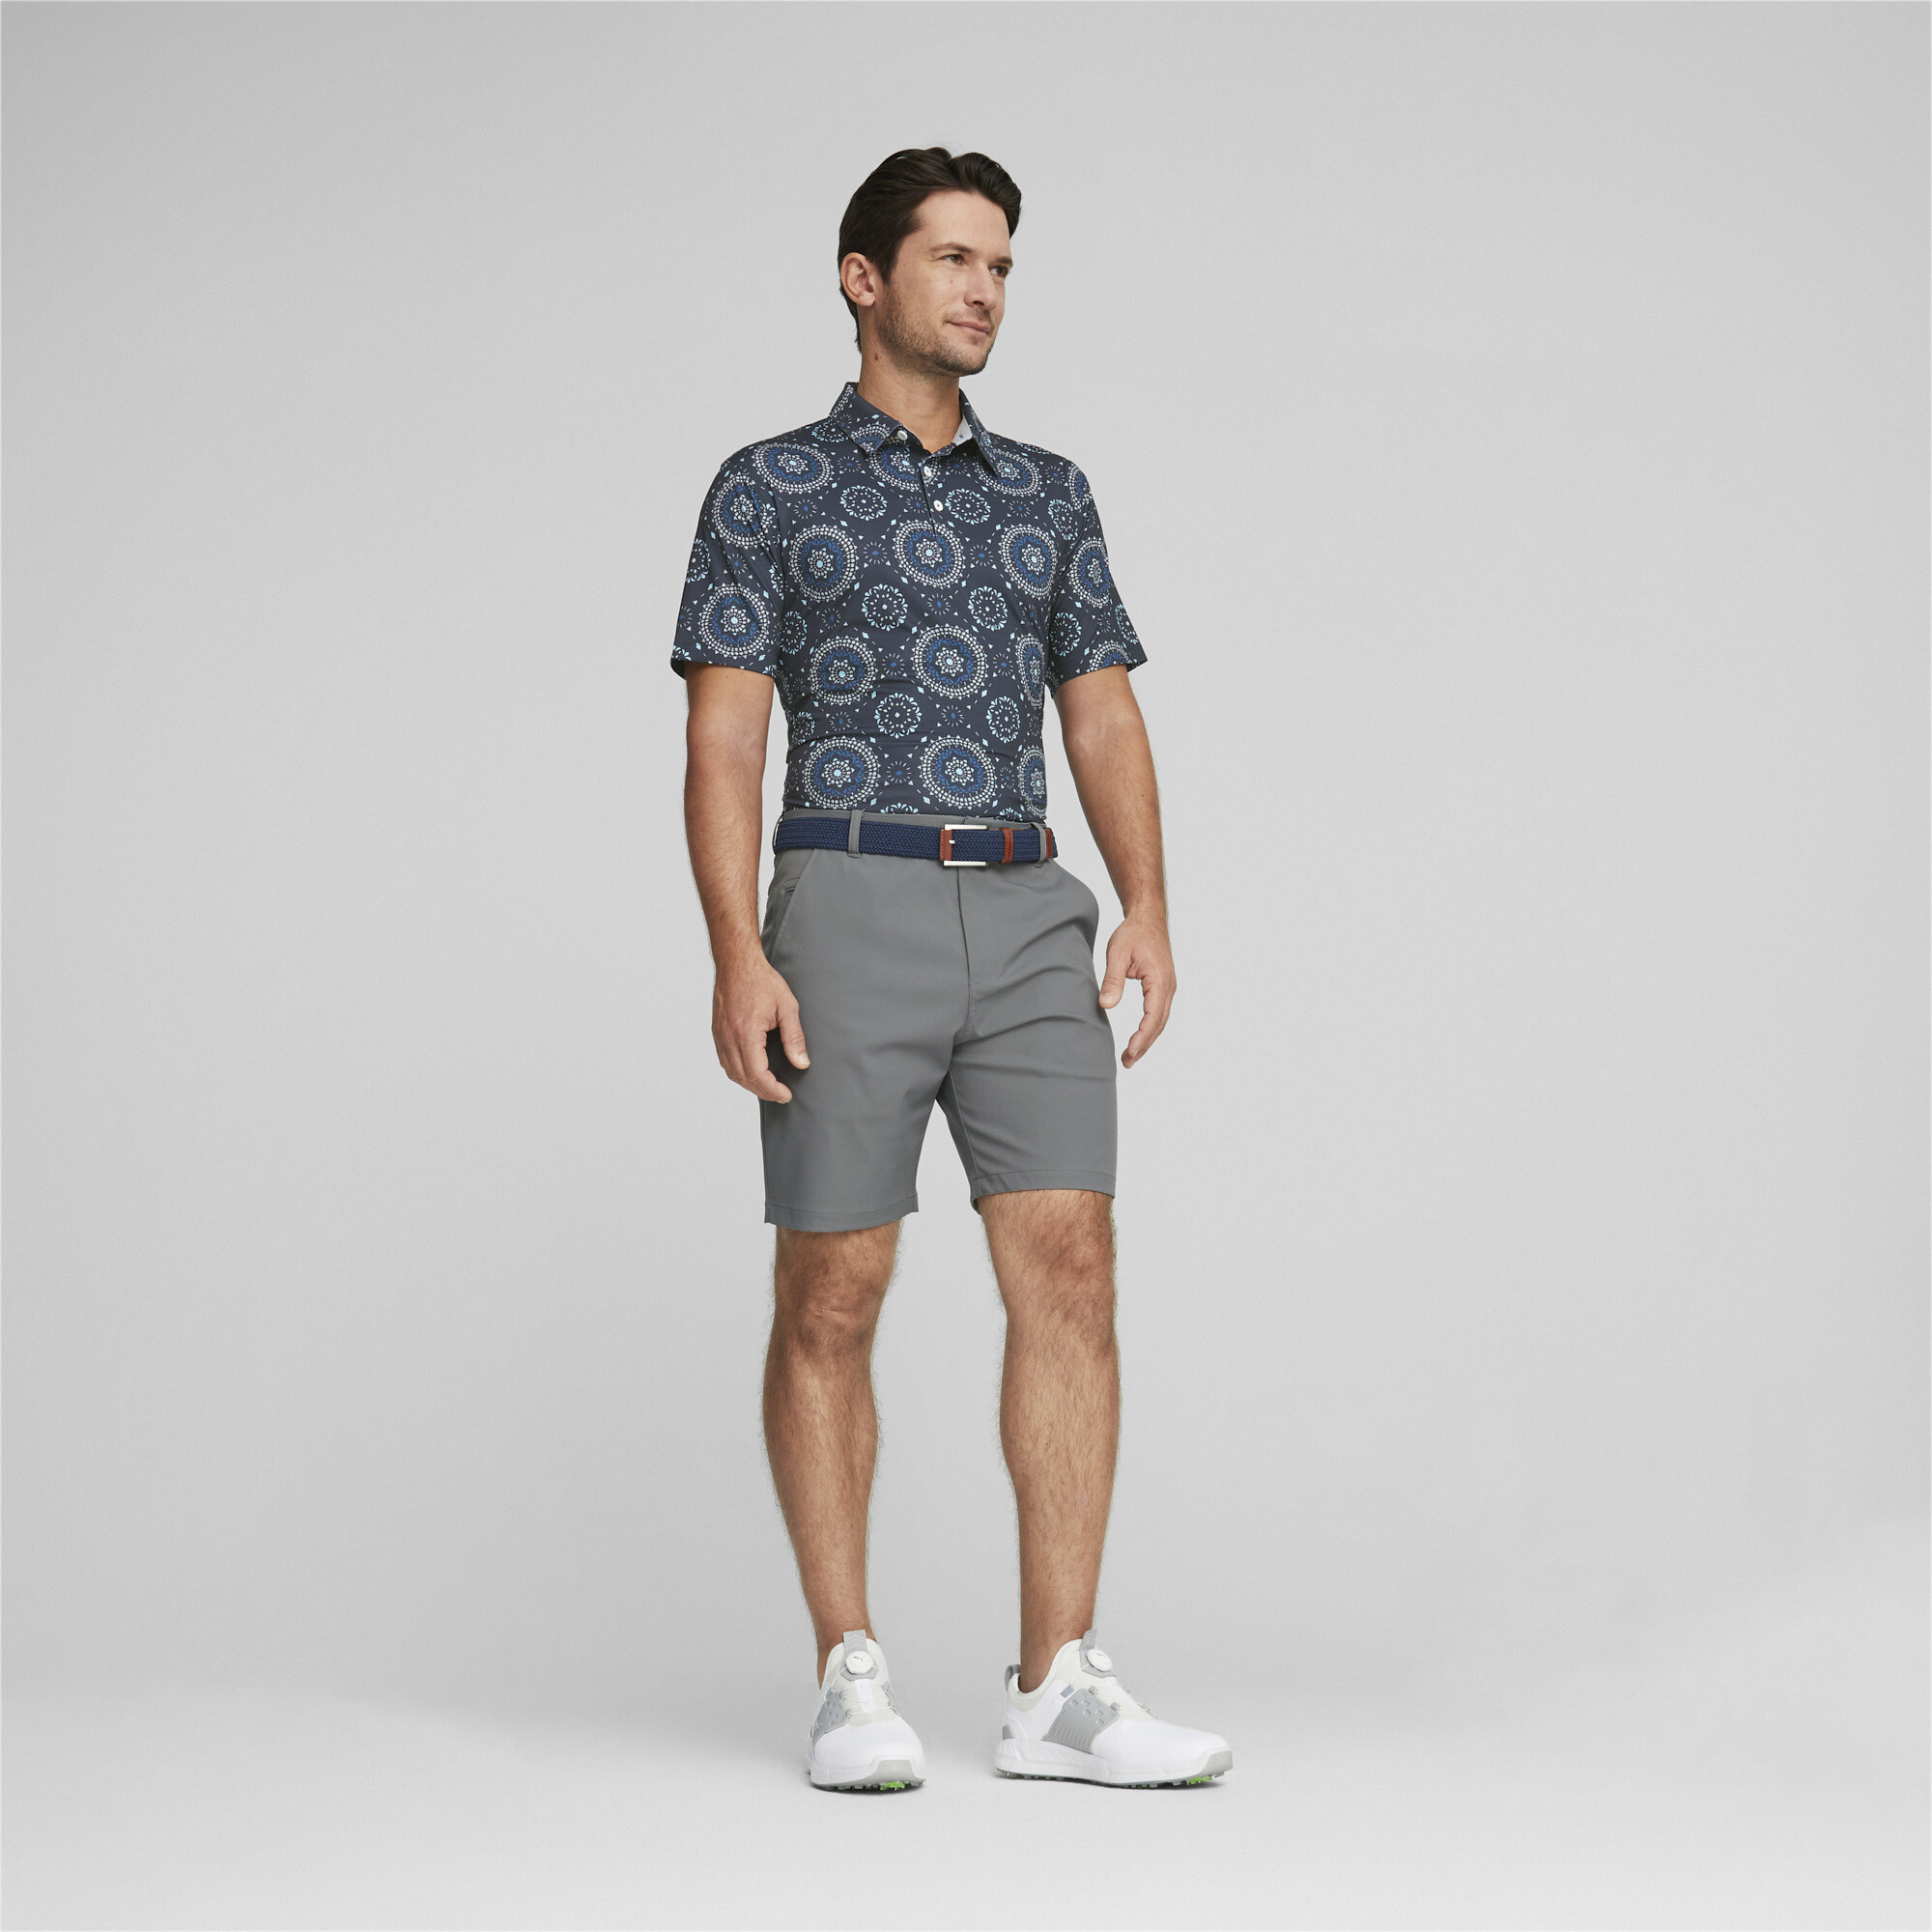 Men's Puma Mattr Rising Golf Polo Shirt T-Shirt, Blue T-Shirt, Size XL T-Shirt, Clothing